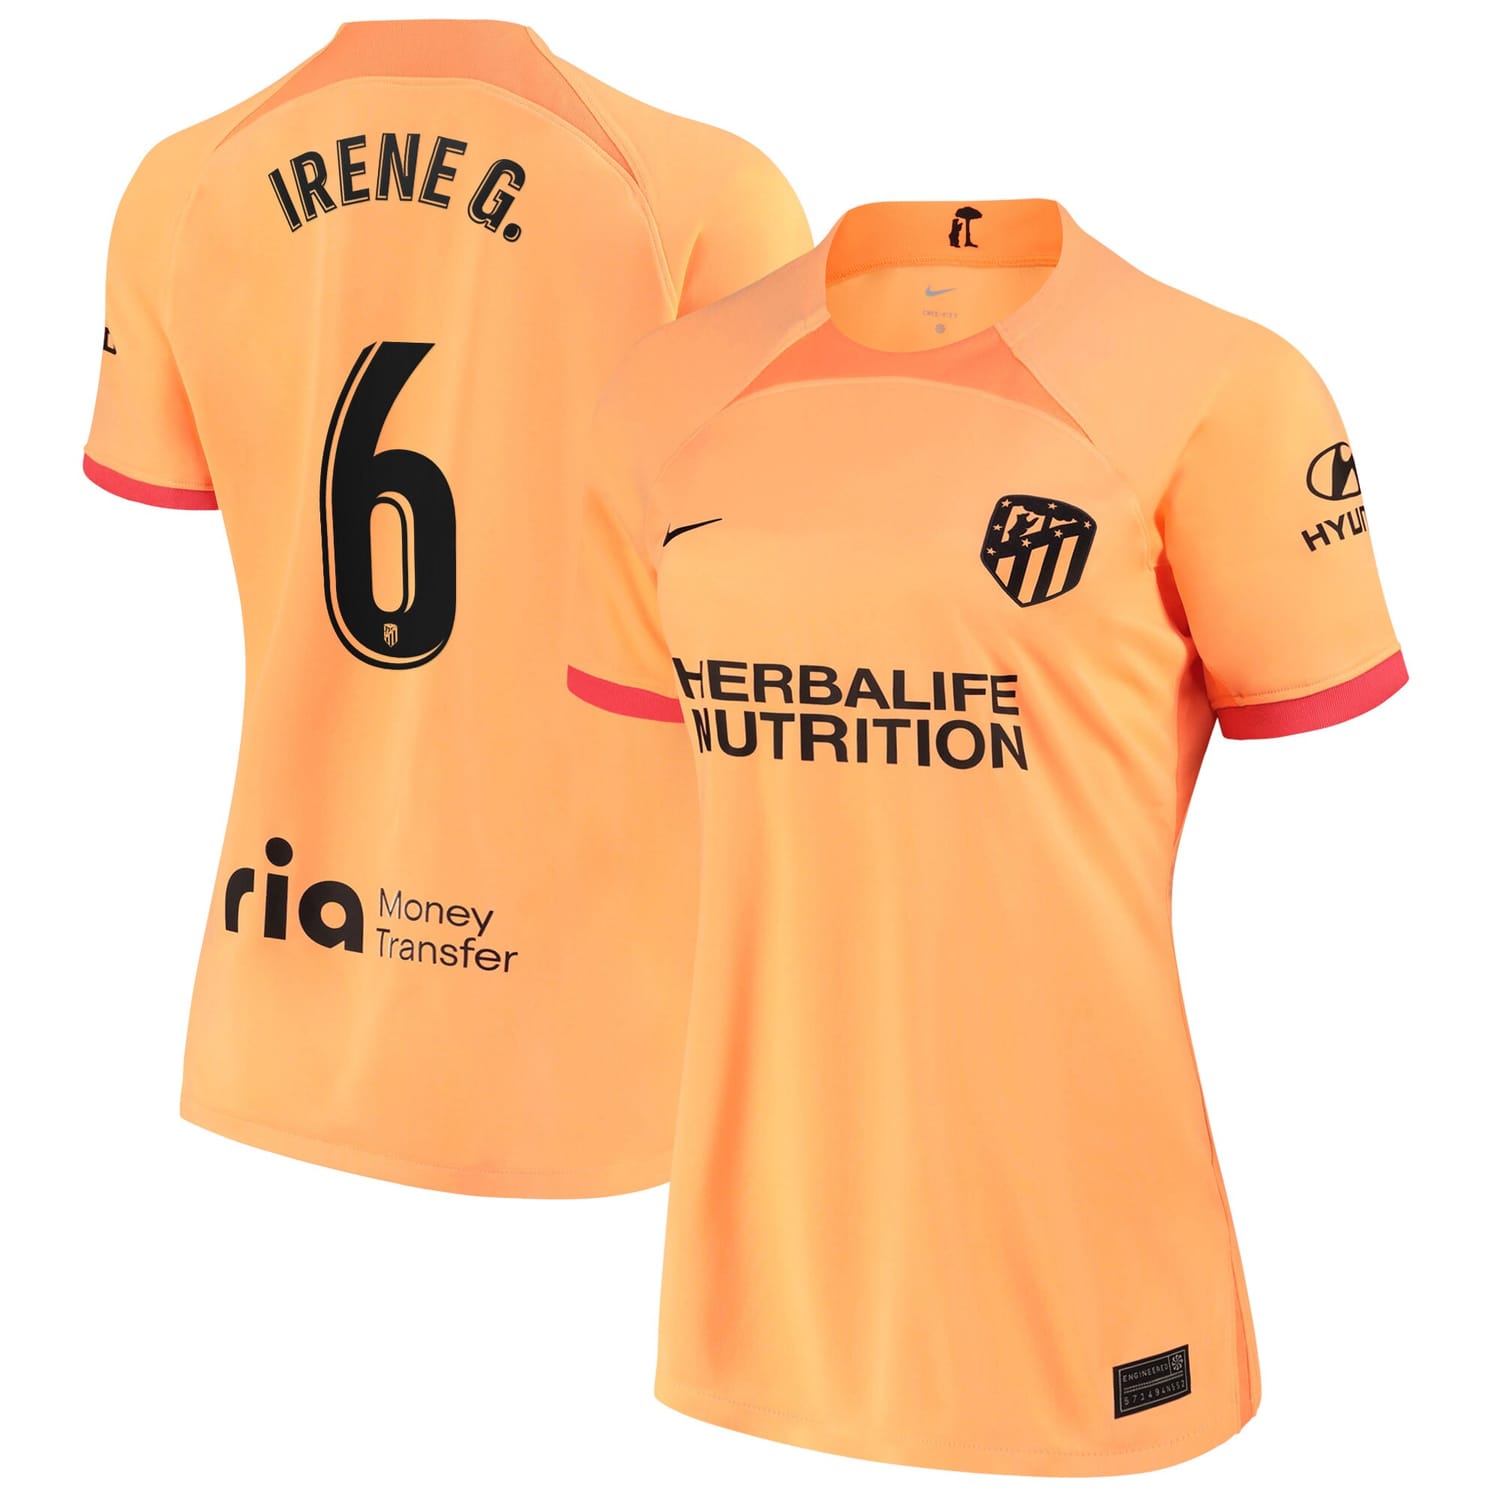 La Liga Atletico de Madrid Third Jersey Shirt 2022-23 player Irene Guerrero 6 printing for Women